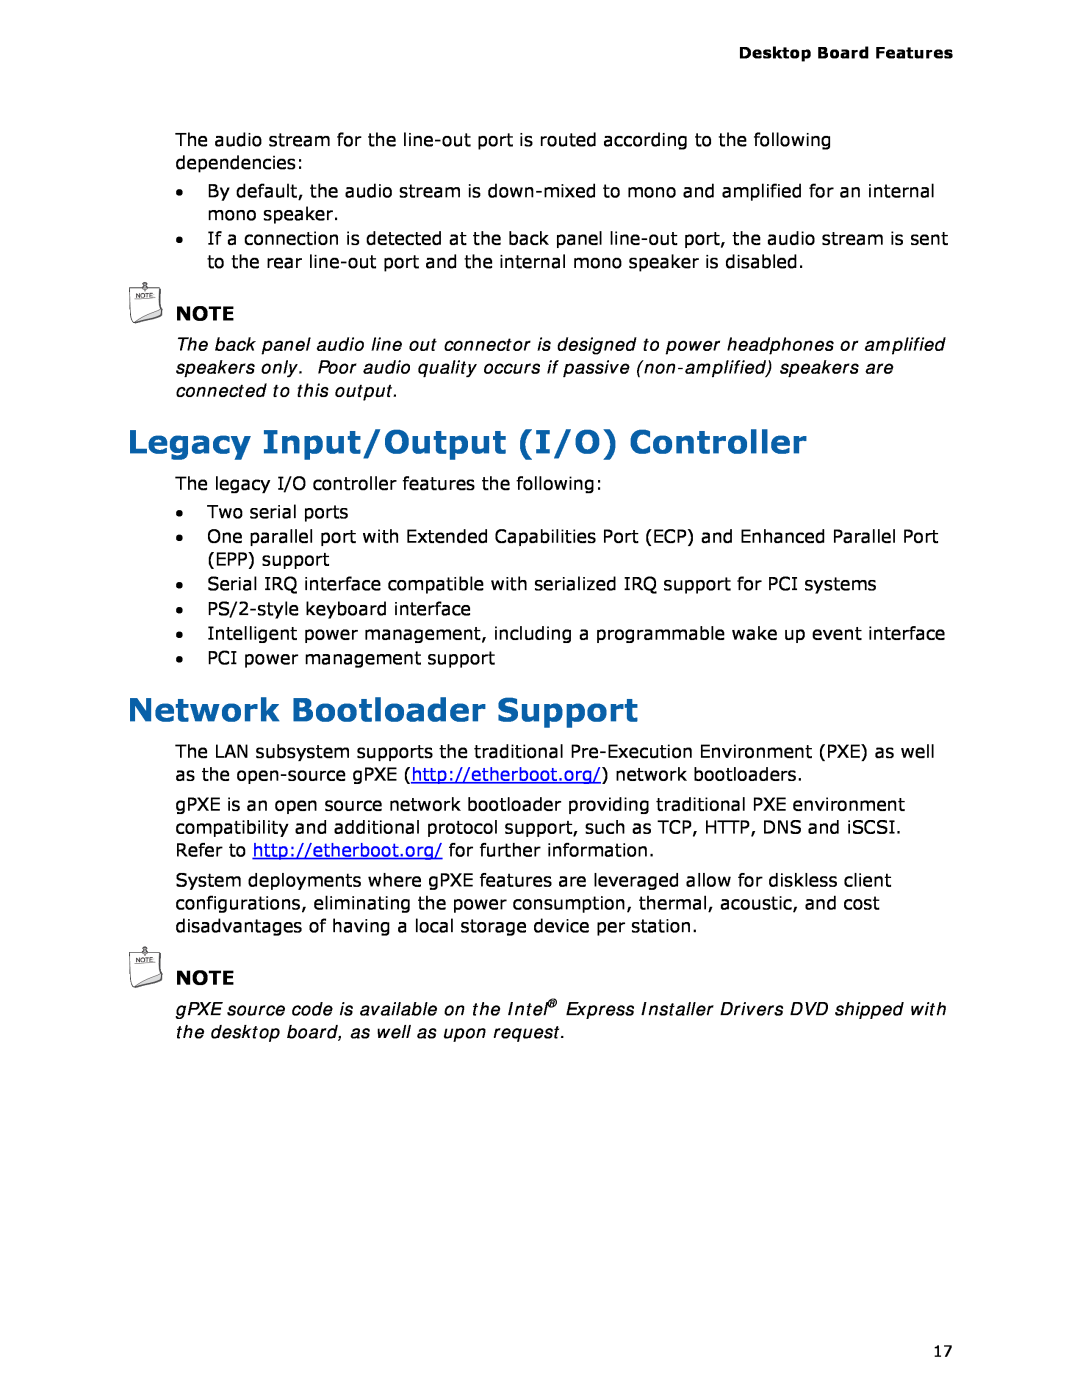 Intel D945GSEJT manual Legacy Input/Output I/O Controller, Network Bootloader Support 